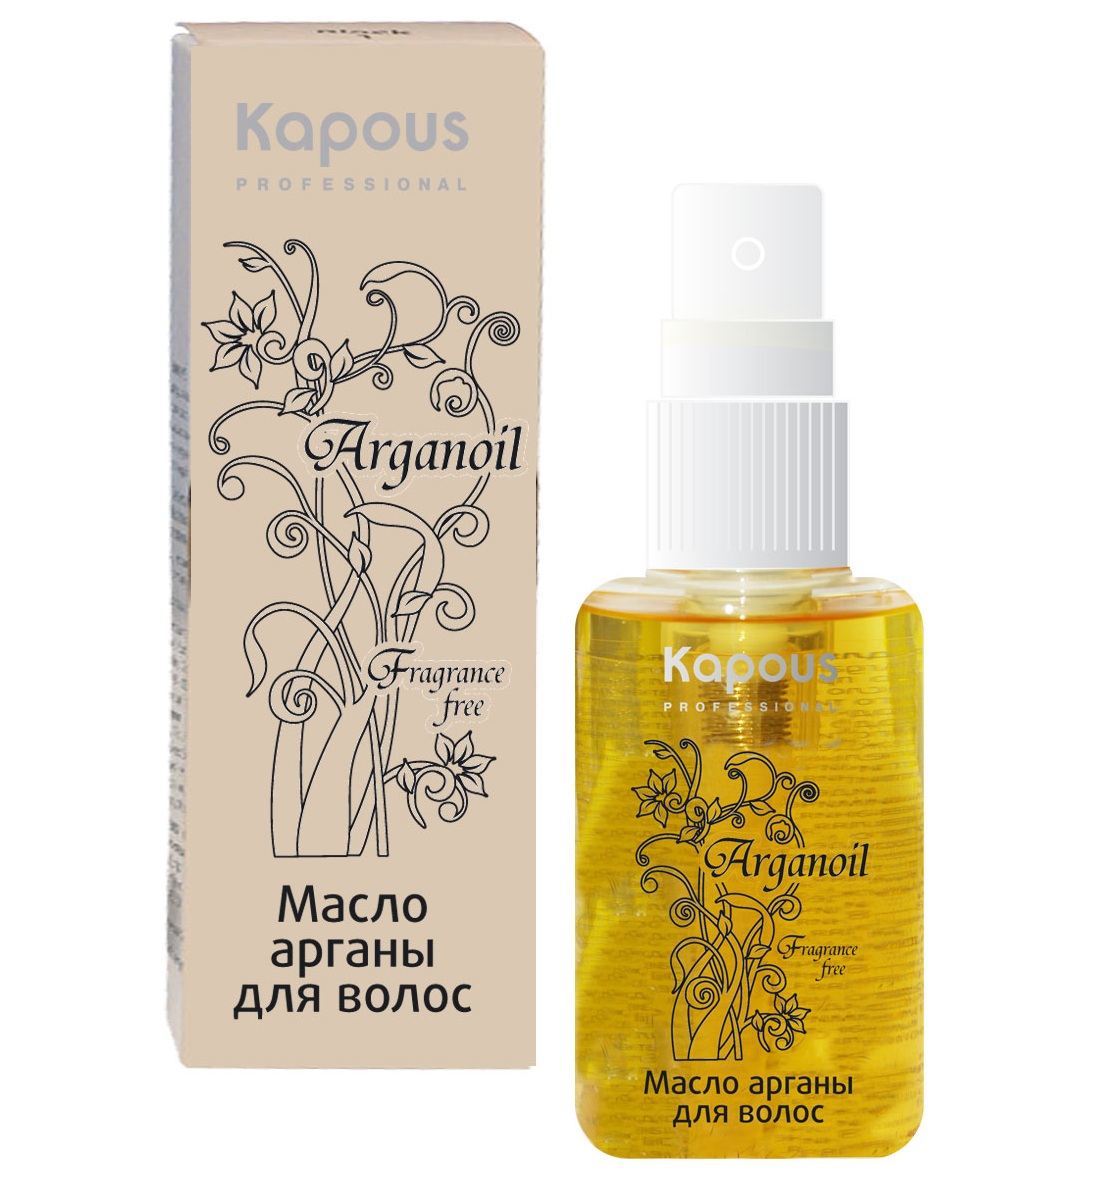 Kapous arganoil масло арганы для волос 75 мл**